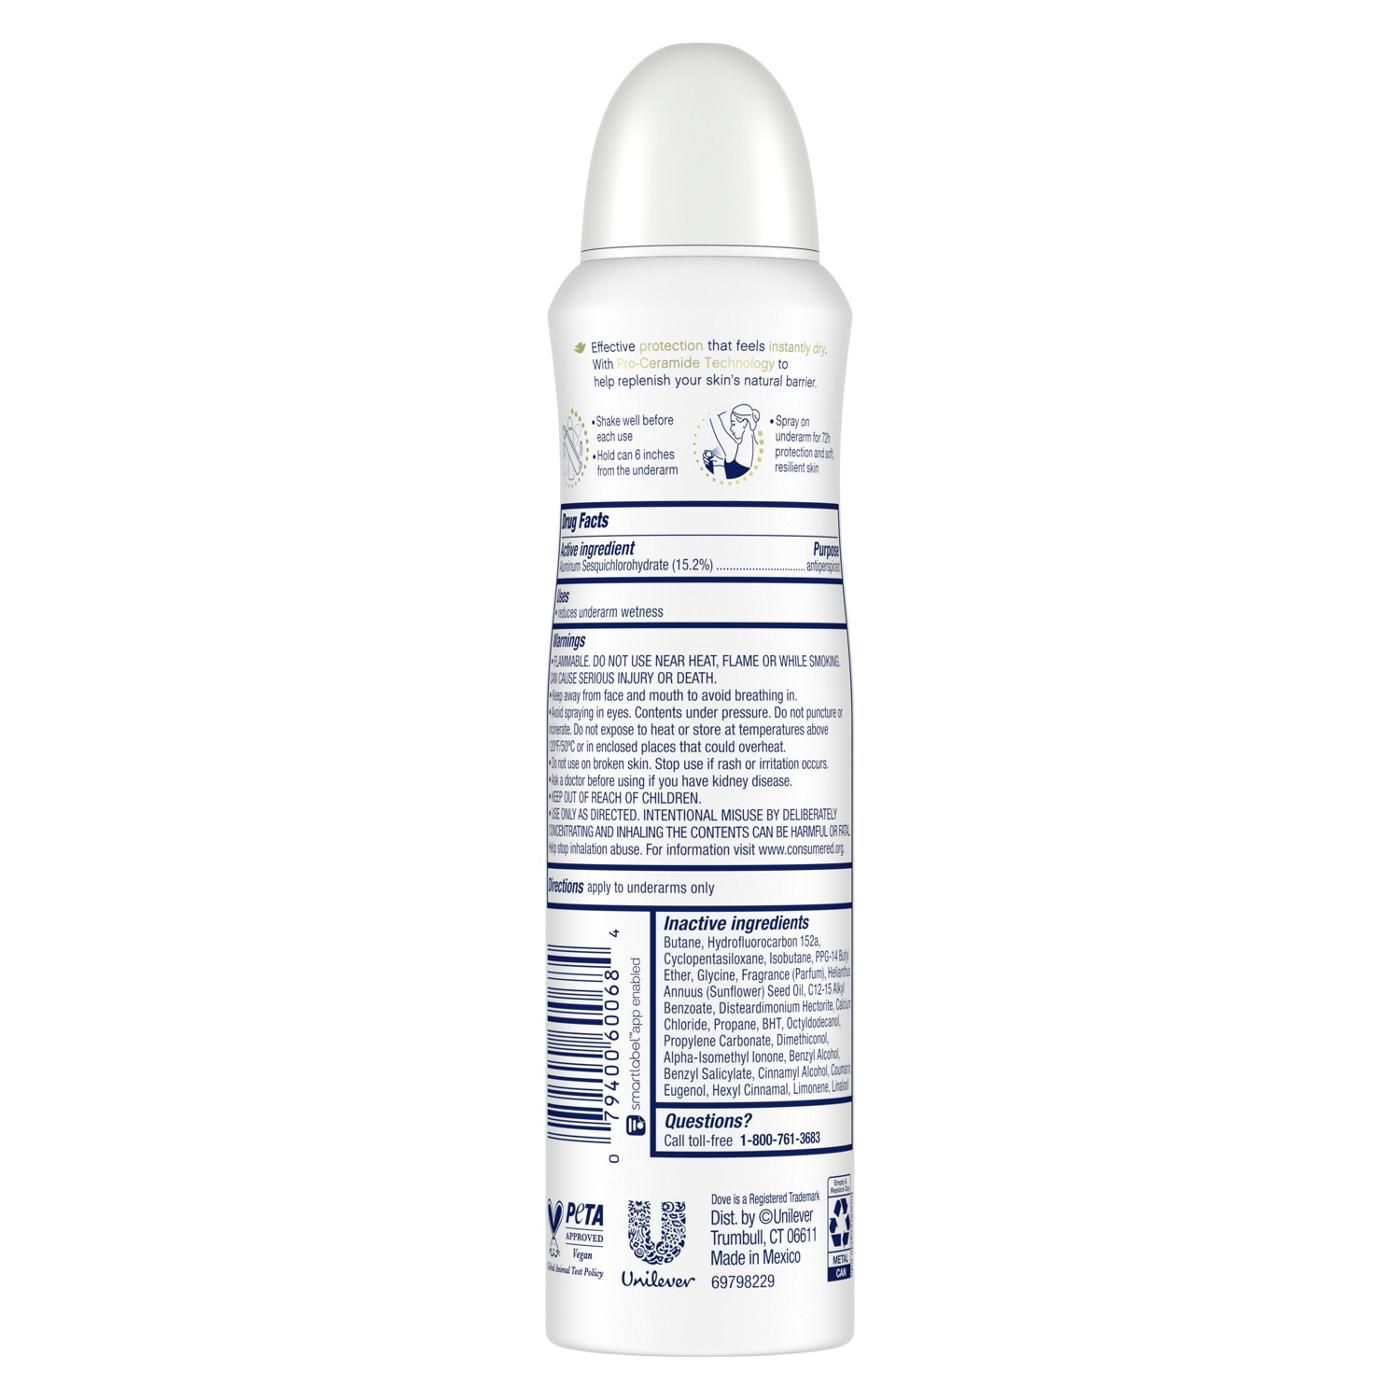 Dove Advanced Care Dry Spray Antiperspirant Deodorant - Coconut; image 8 of 9